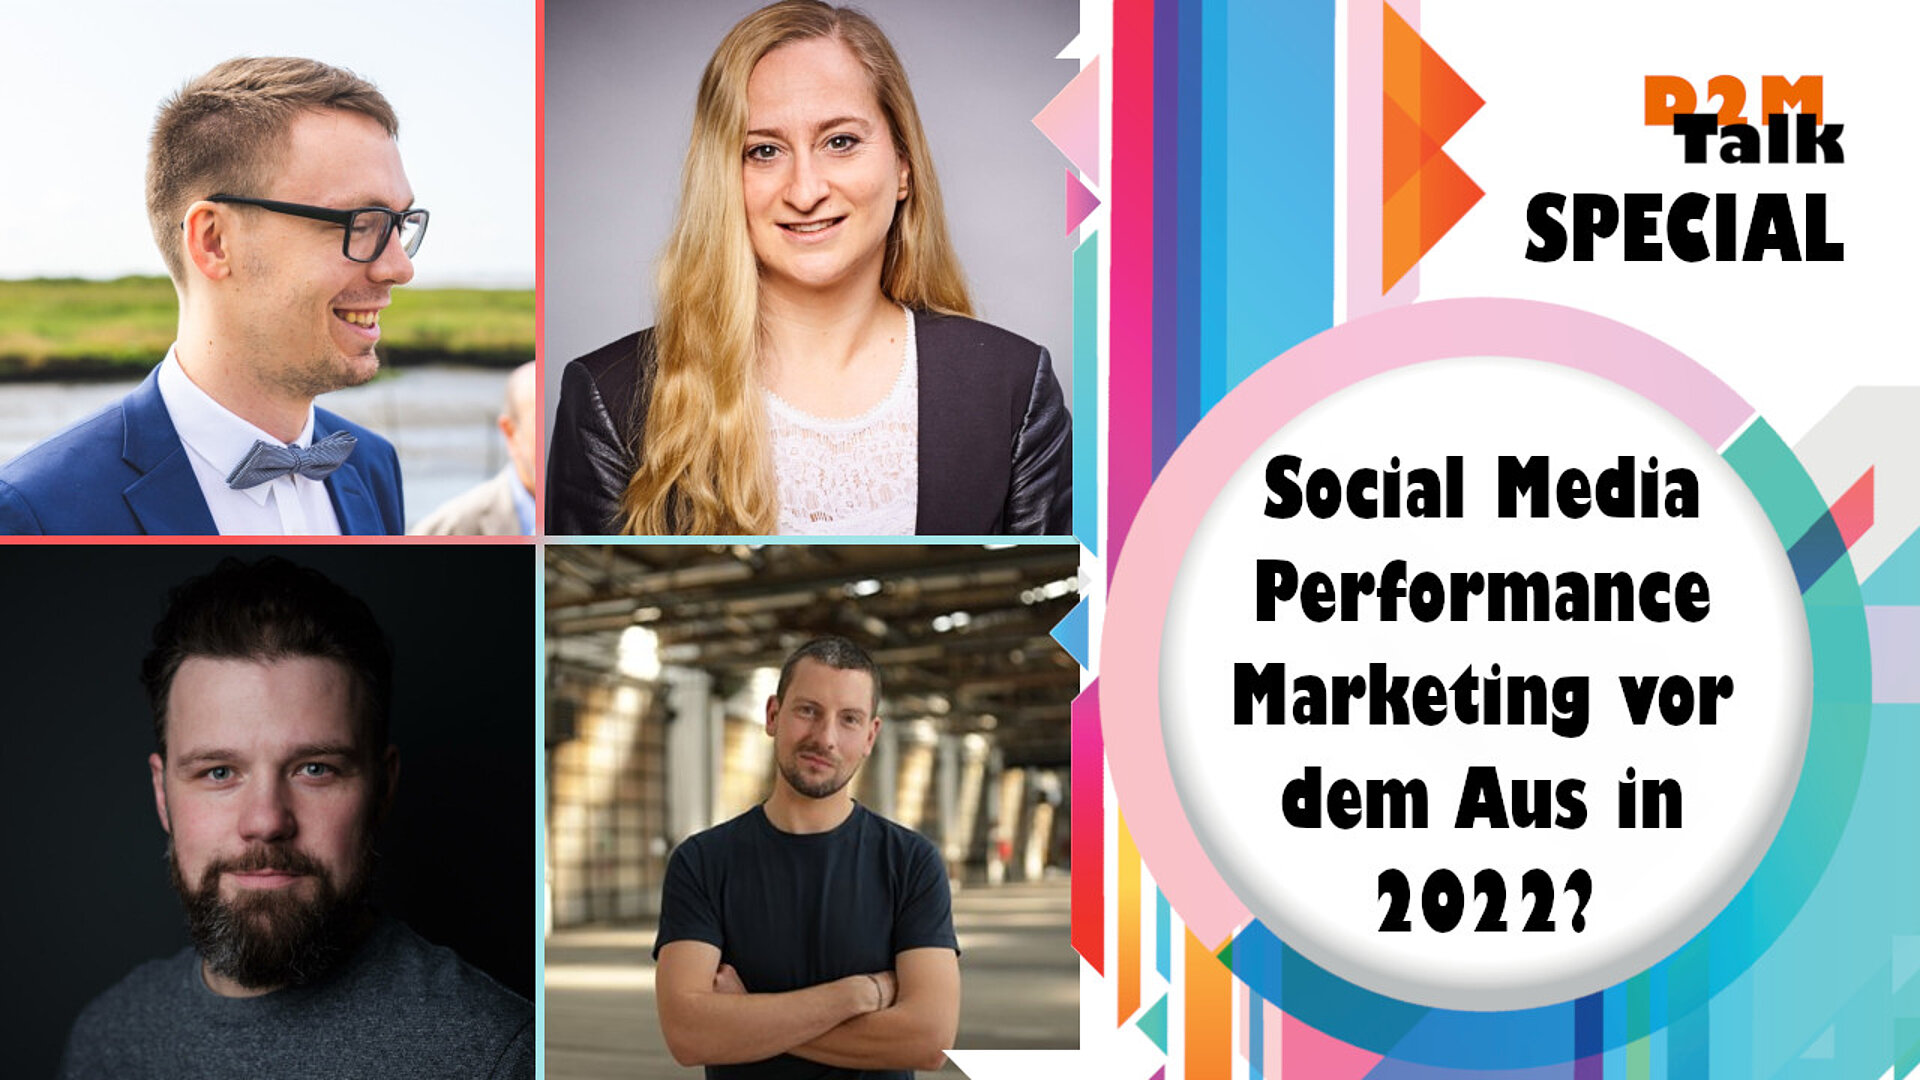 Social Media Performance Marketing vor dem Aus in 2022?